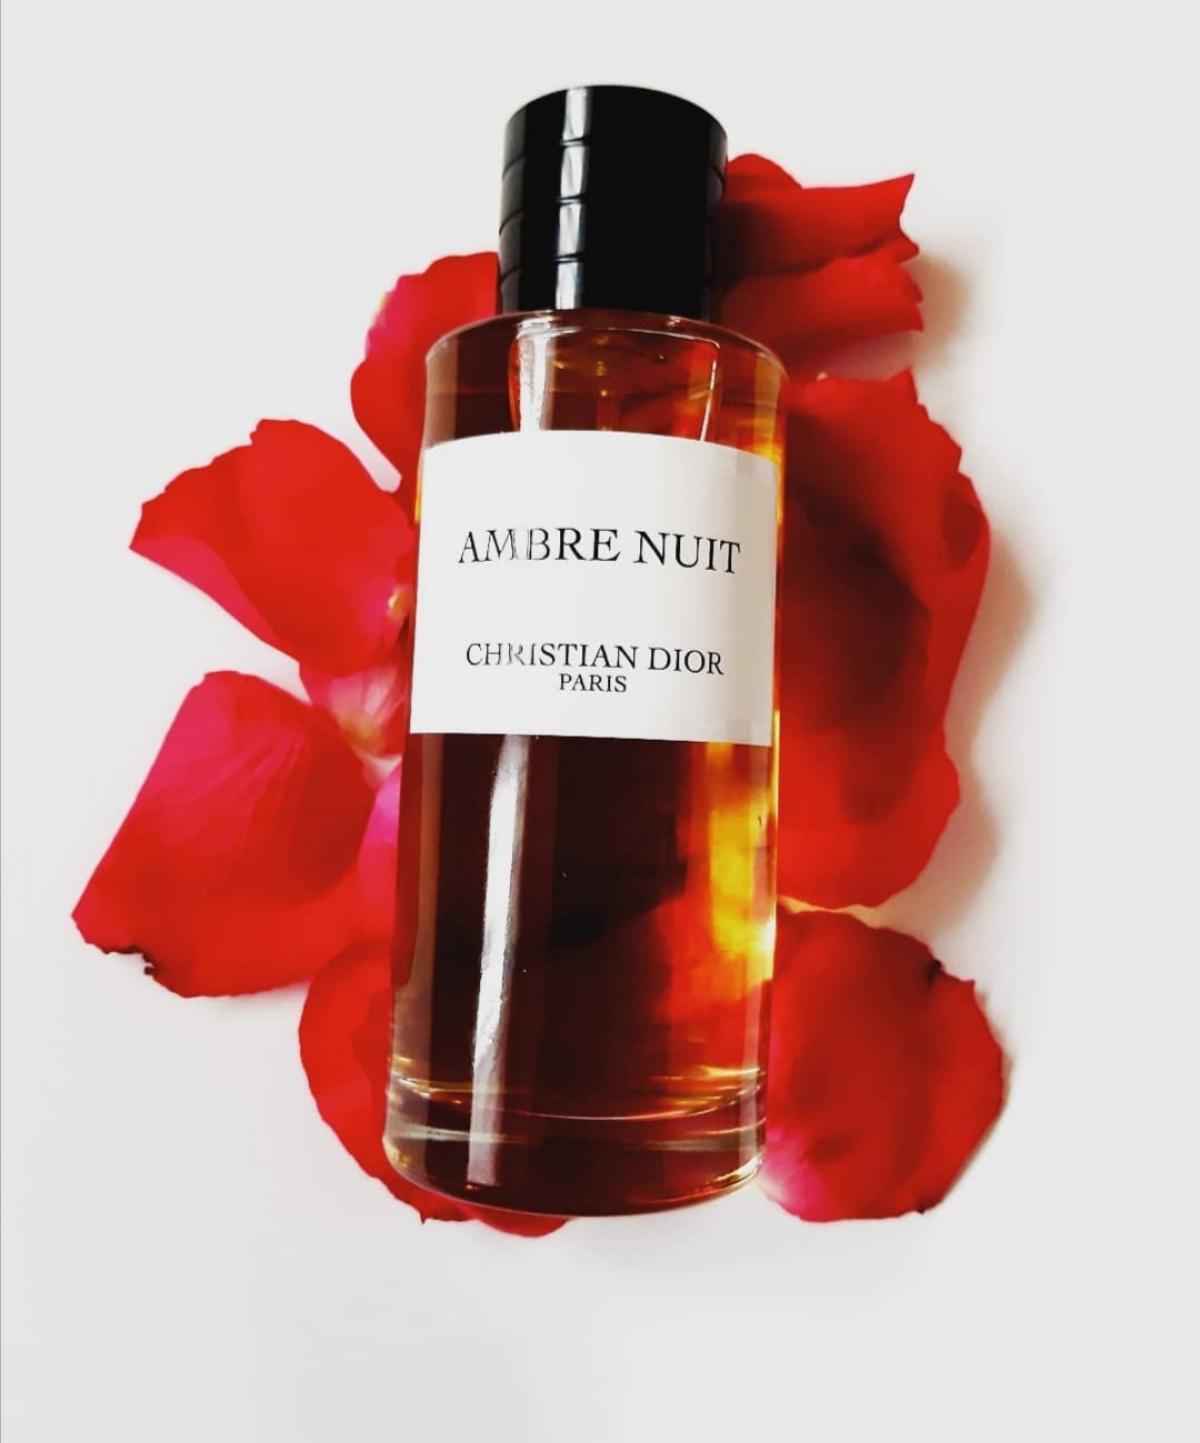 Ambre Nuit Dior - una fragranza unisex 2018